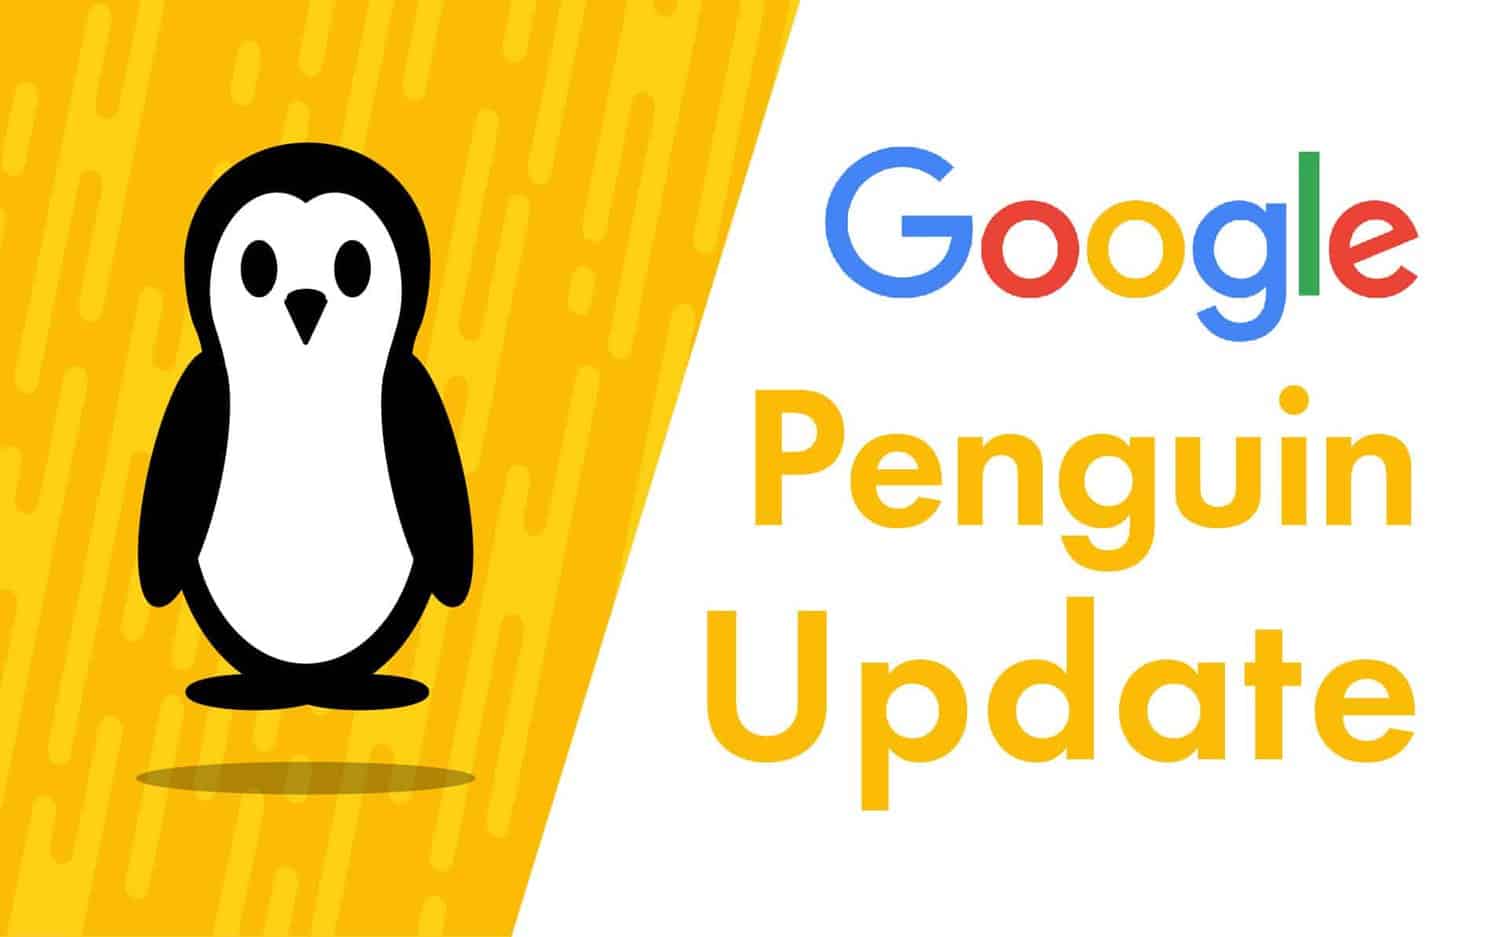 Google penguin update featured image